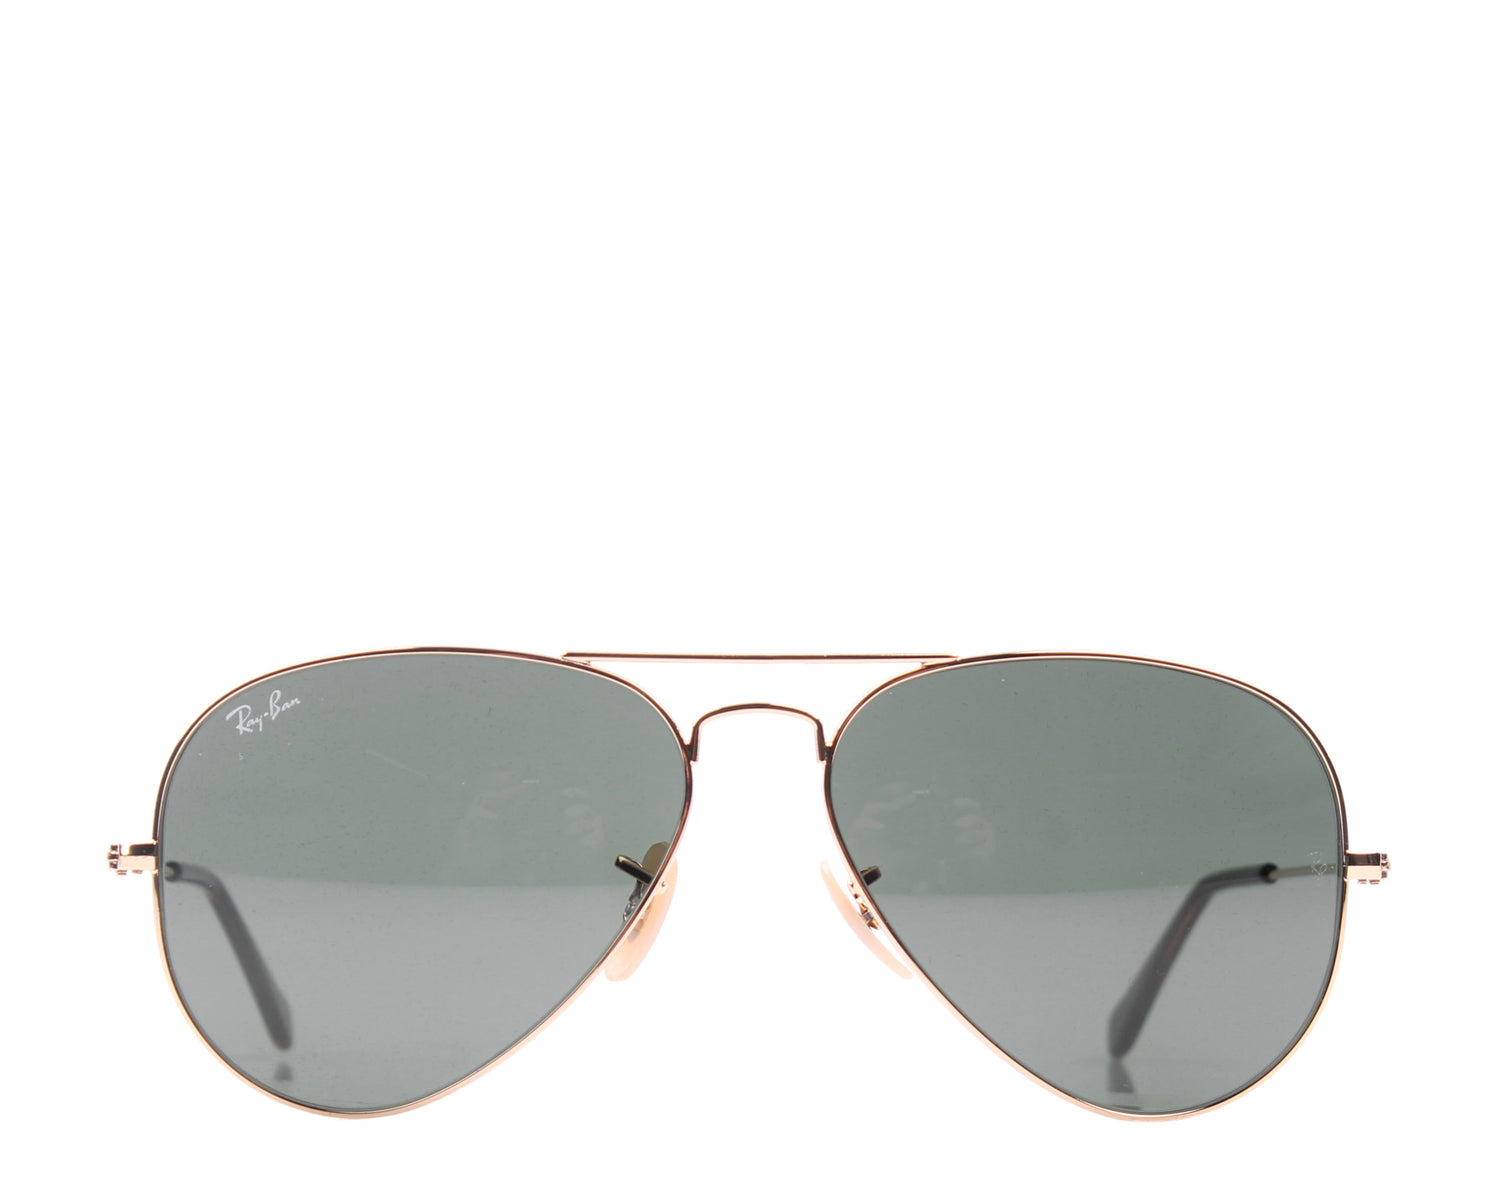 Ray-Ban Aviator Classic Men's Sunglasses